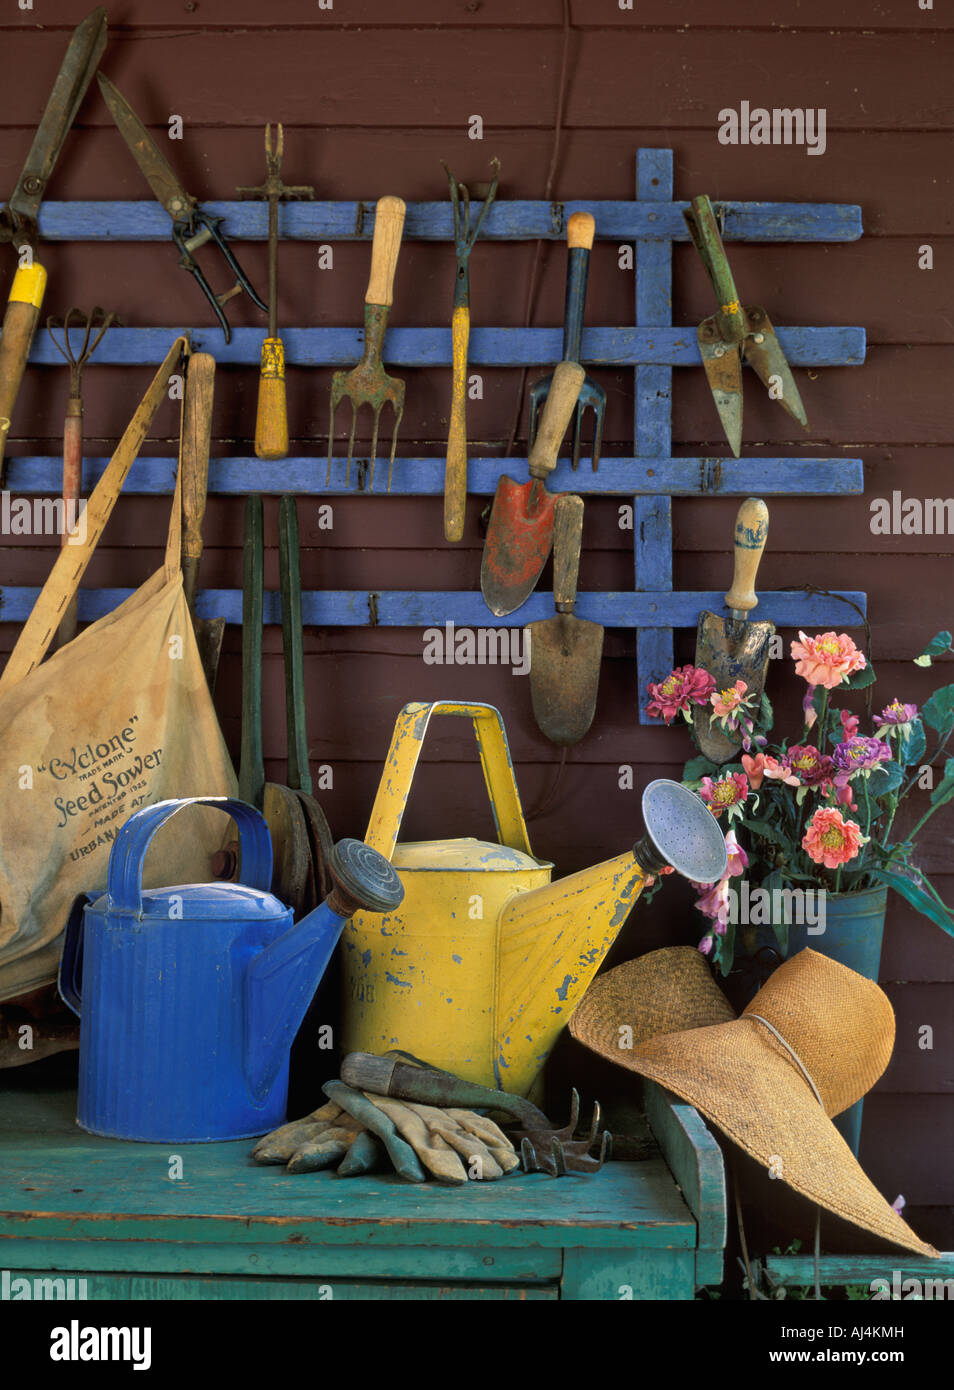 14+ Identify Antique Garden Tools - JoniMalaika